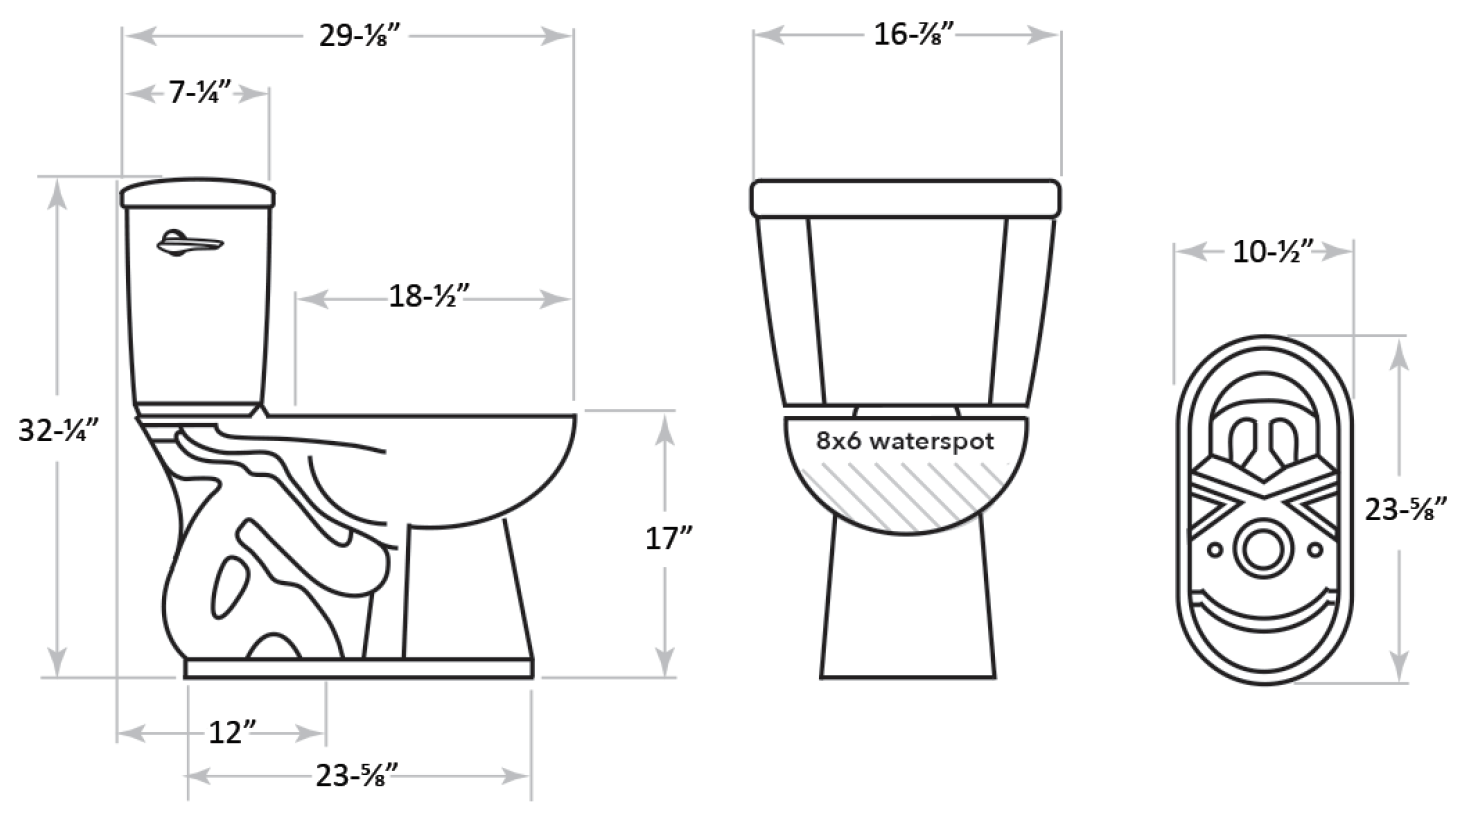 SABRE Elongated Bowl ADA Toilet technical info